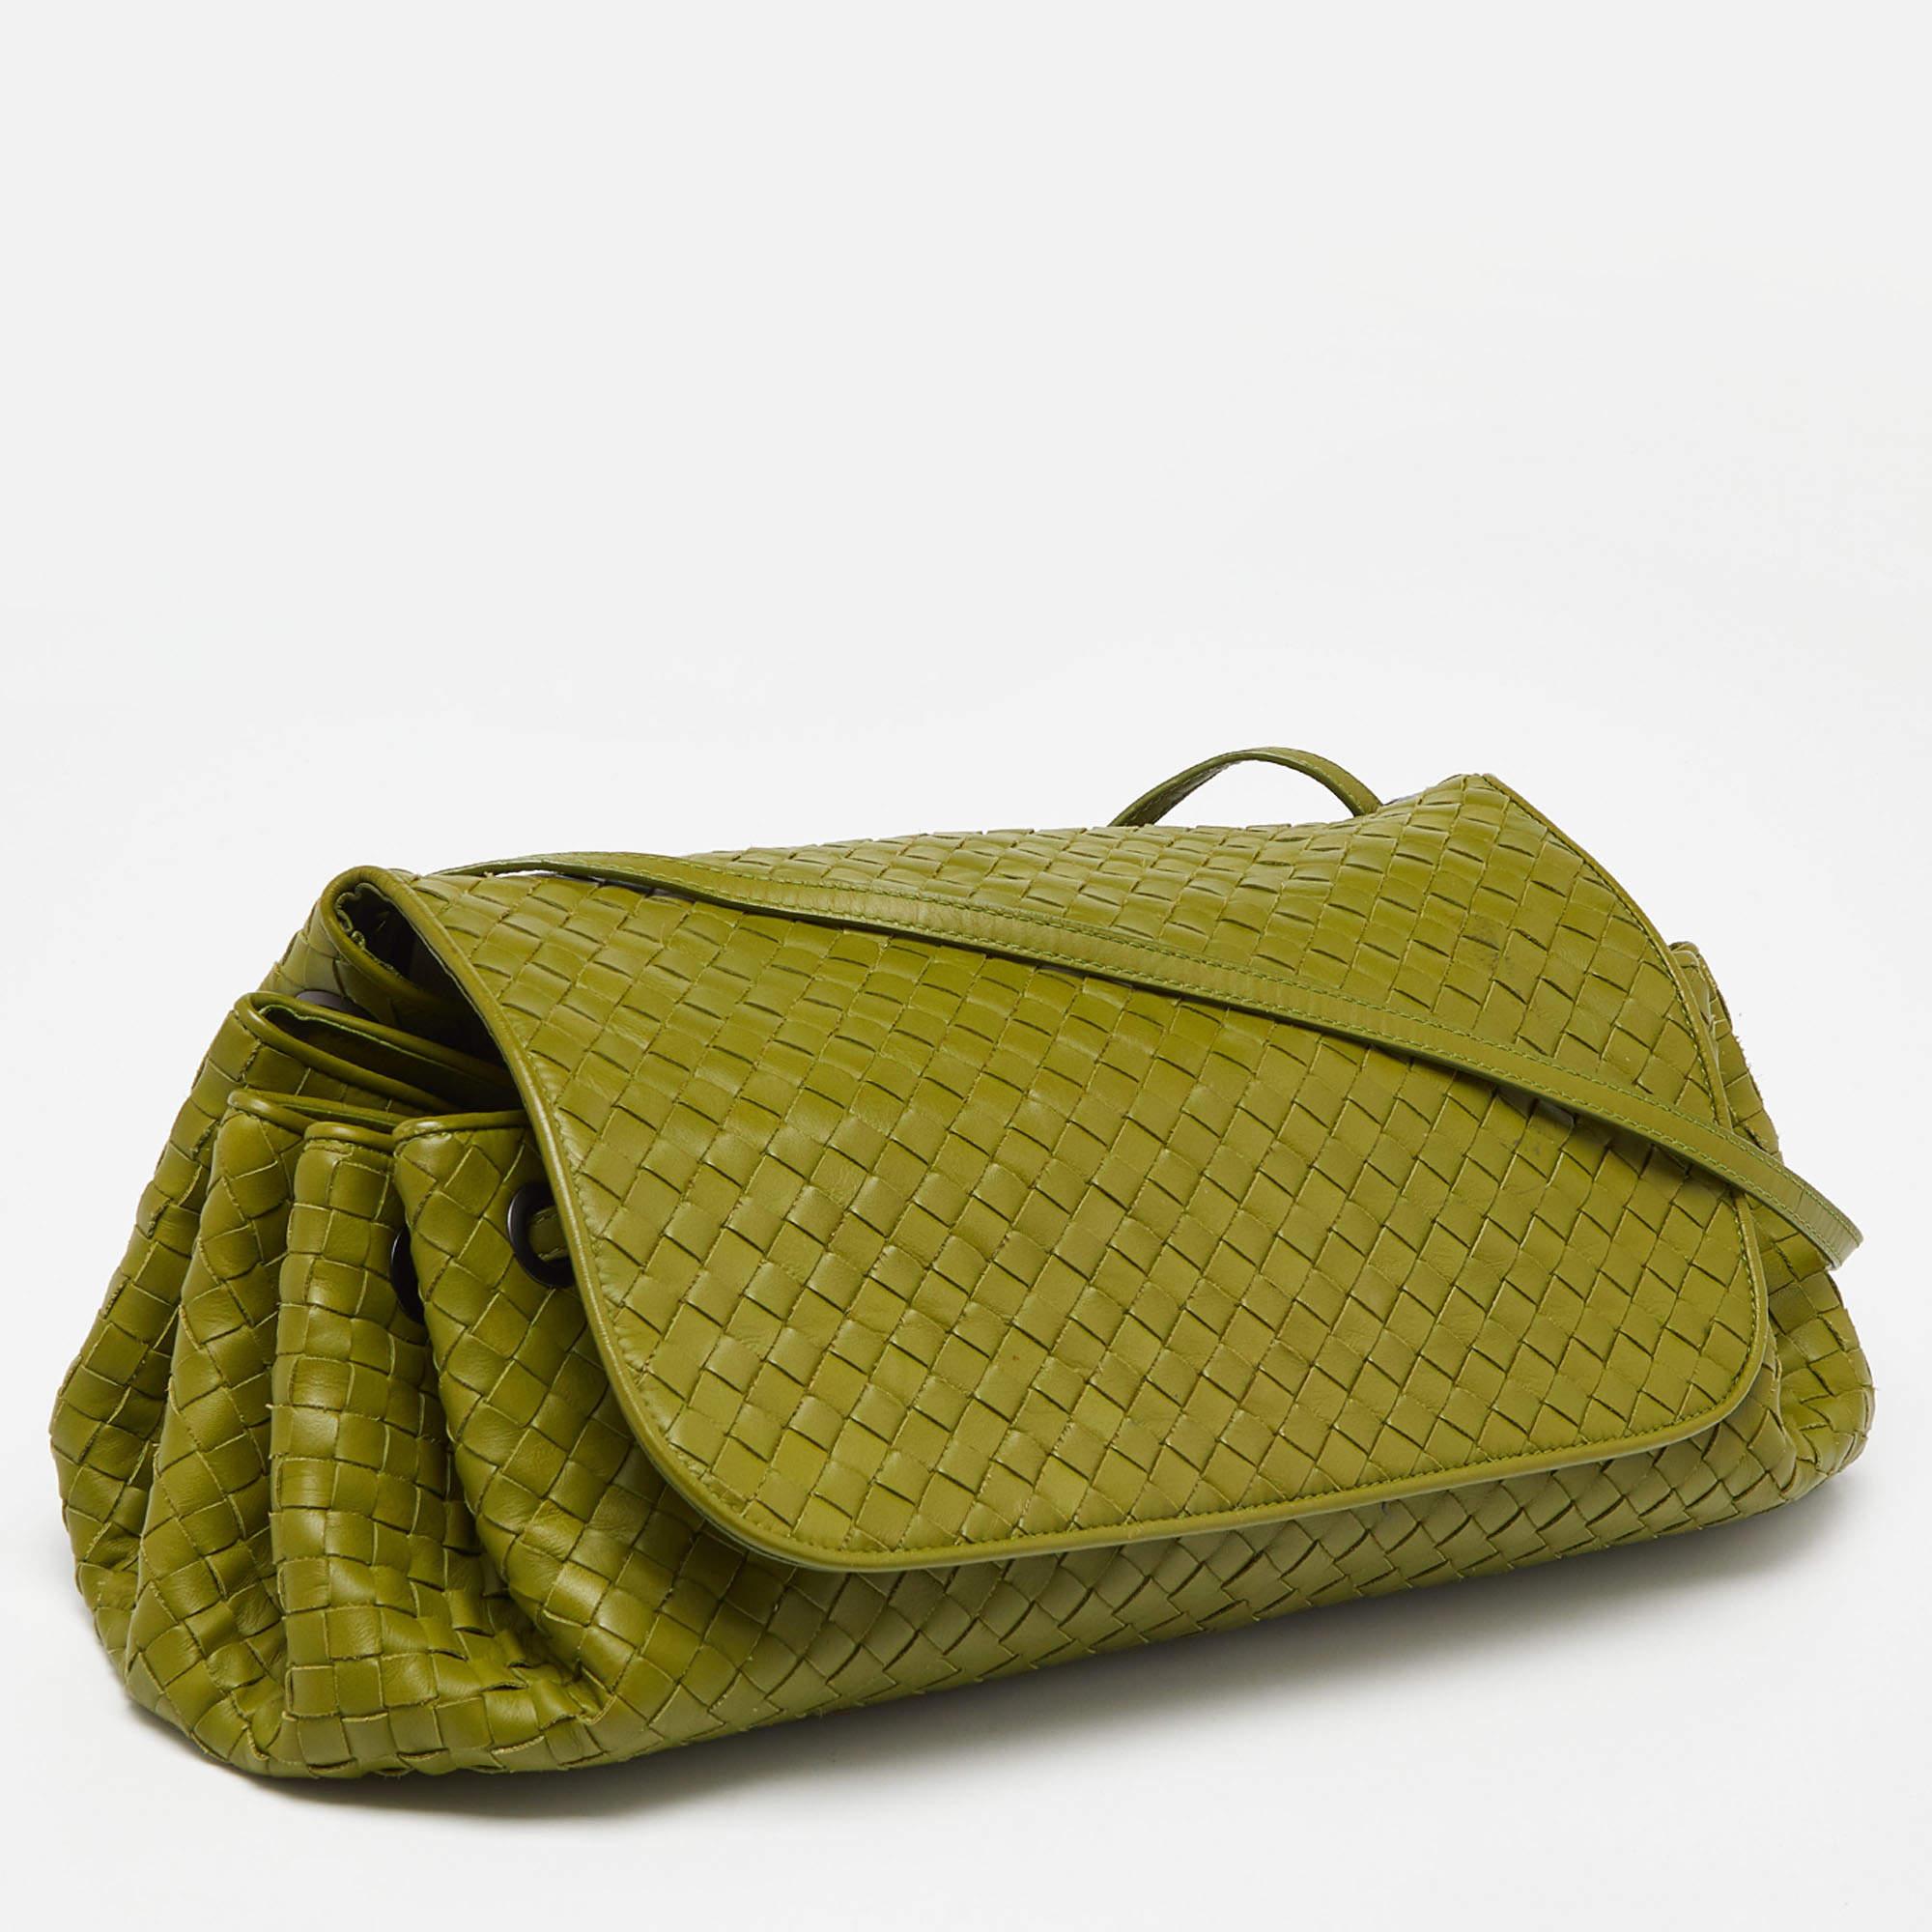 Bottega Veneta Green Intrecciato Leather Drawstring Flap Bag In Good Condition For Sale In Dubai, Al Qouz 2